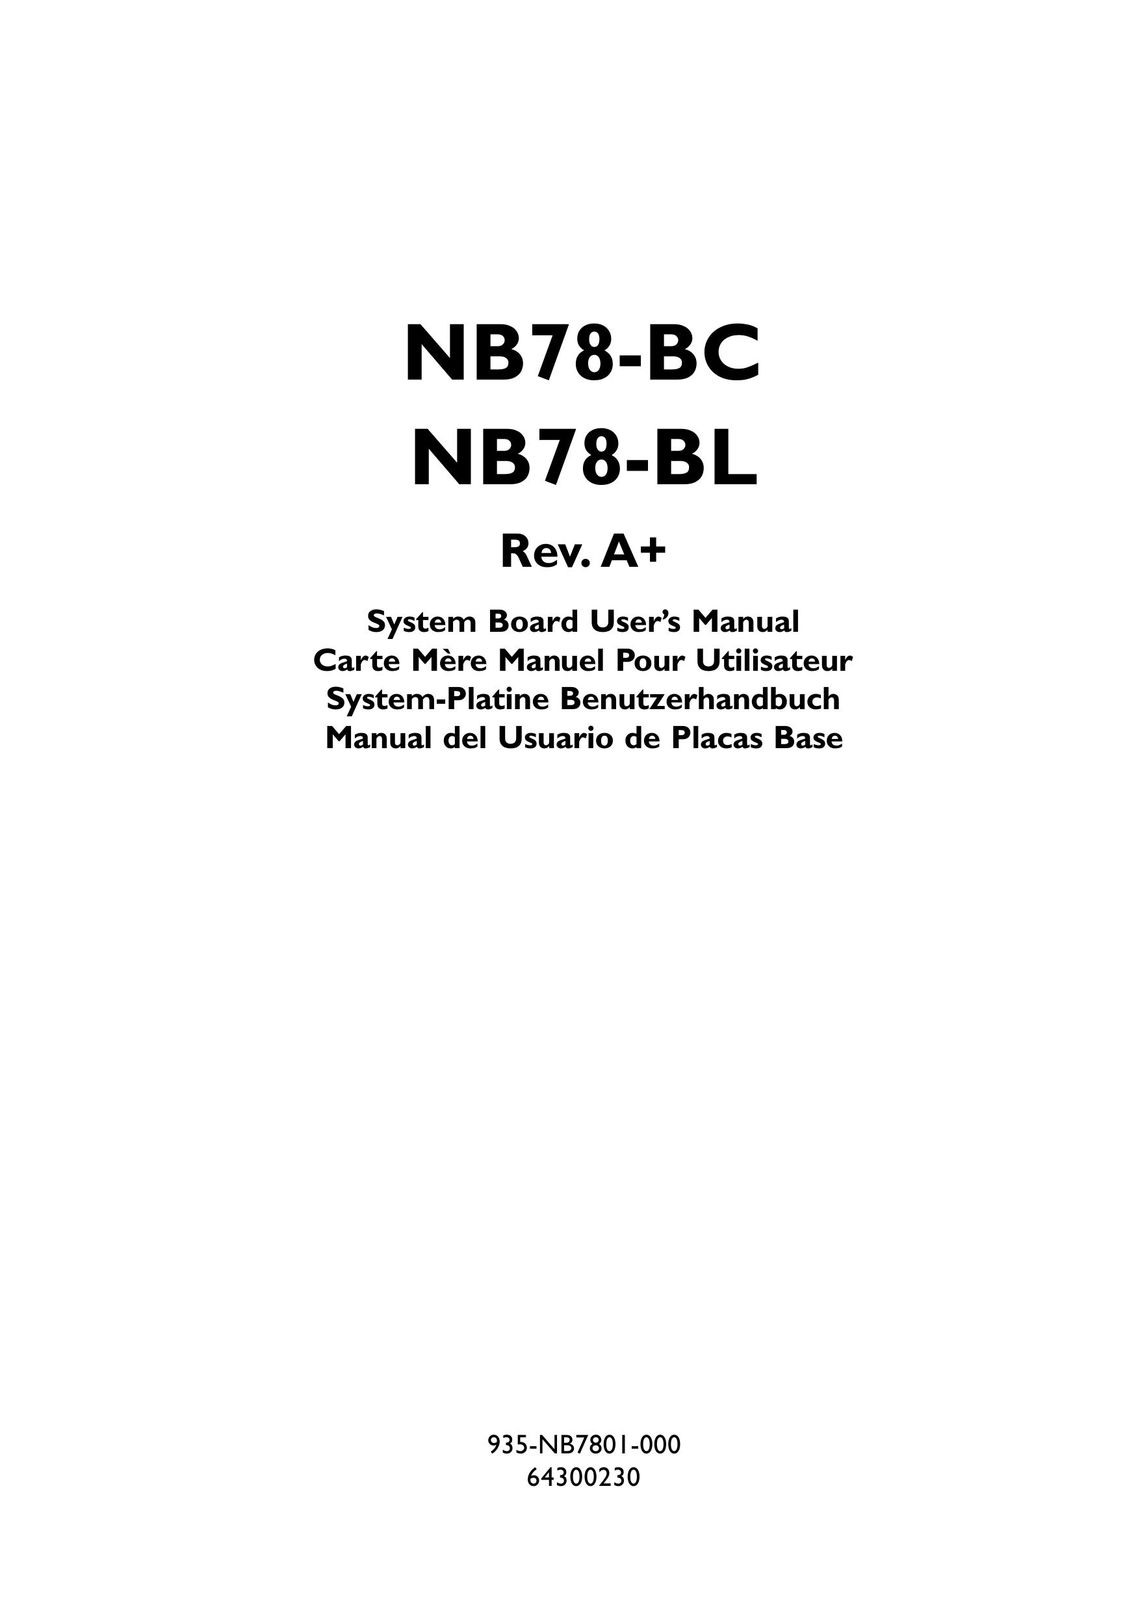 DFI NB78-BL Computer Hardware User Manual